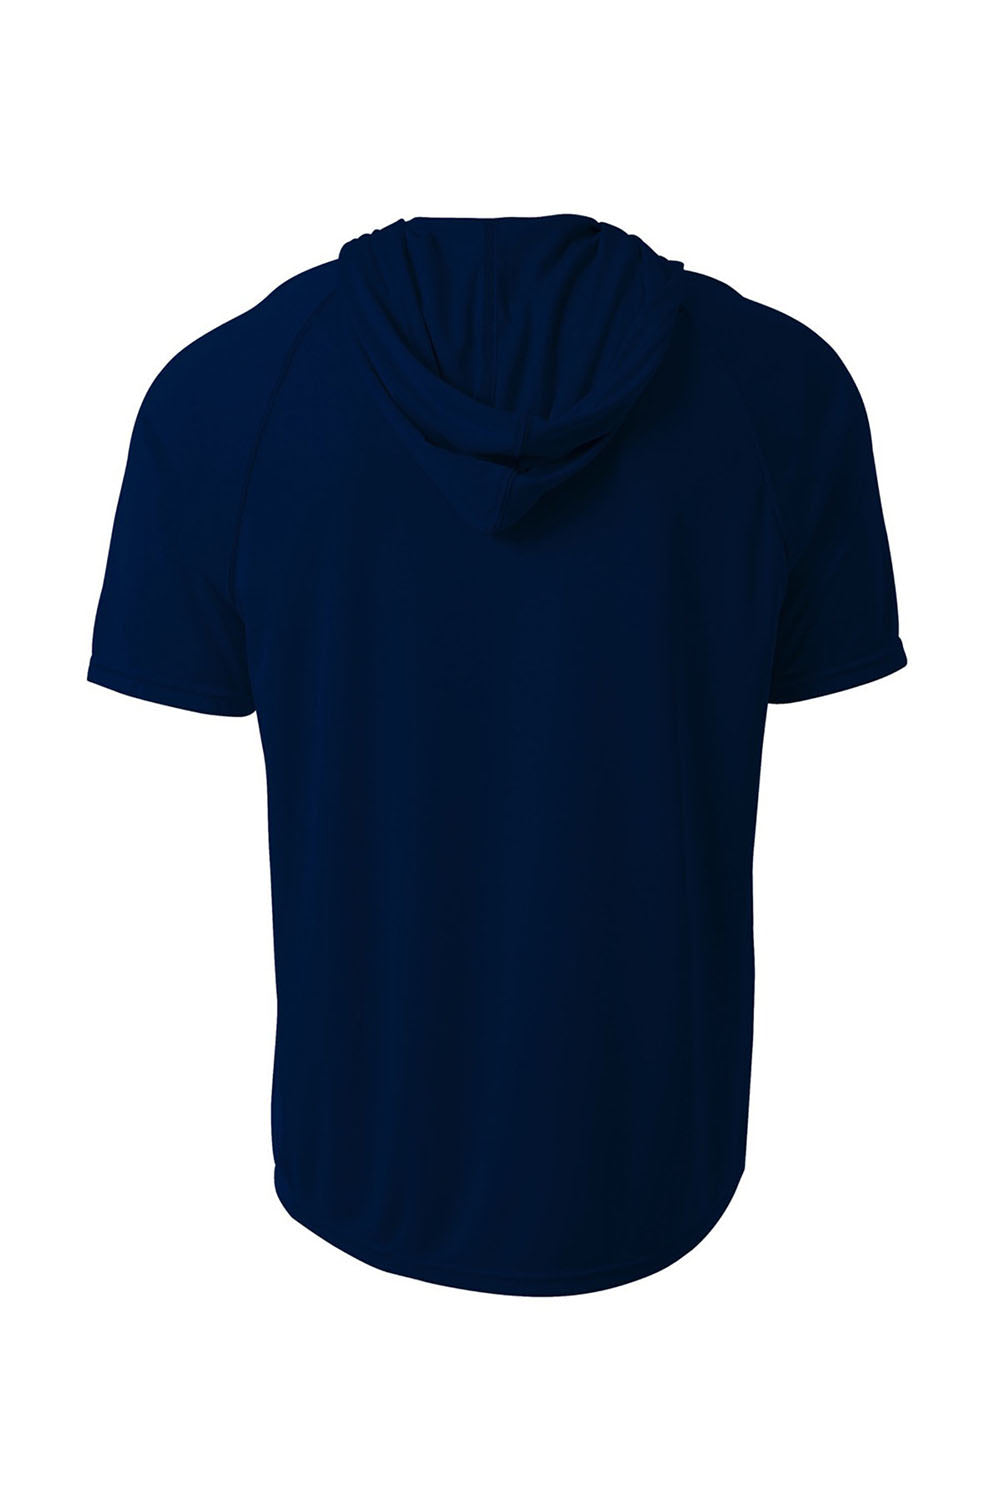 A4 N3408 Mens Performance Moisture Wicking Short Sleeve Hooded T-Shirt Hoodie Navy Blue Flat Back